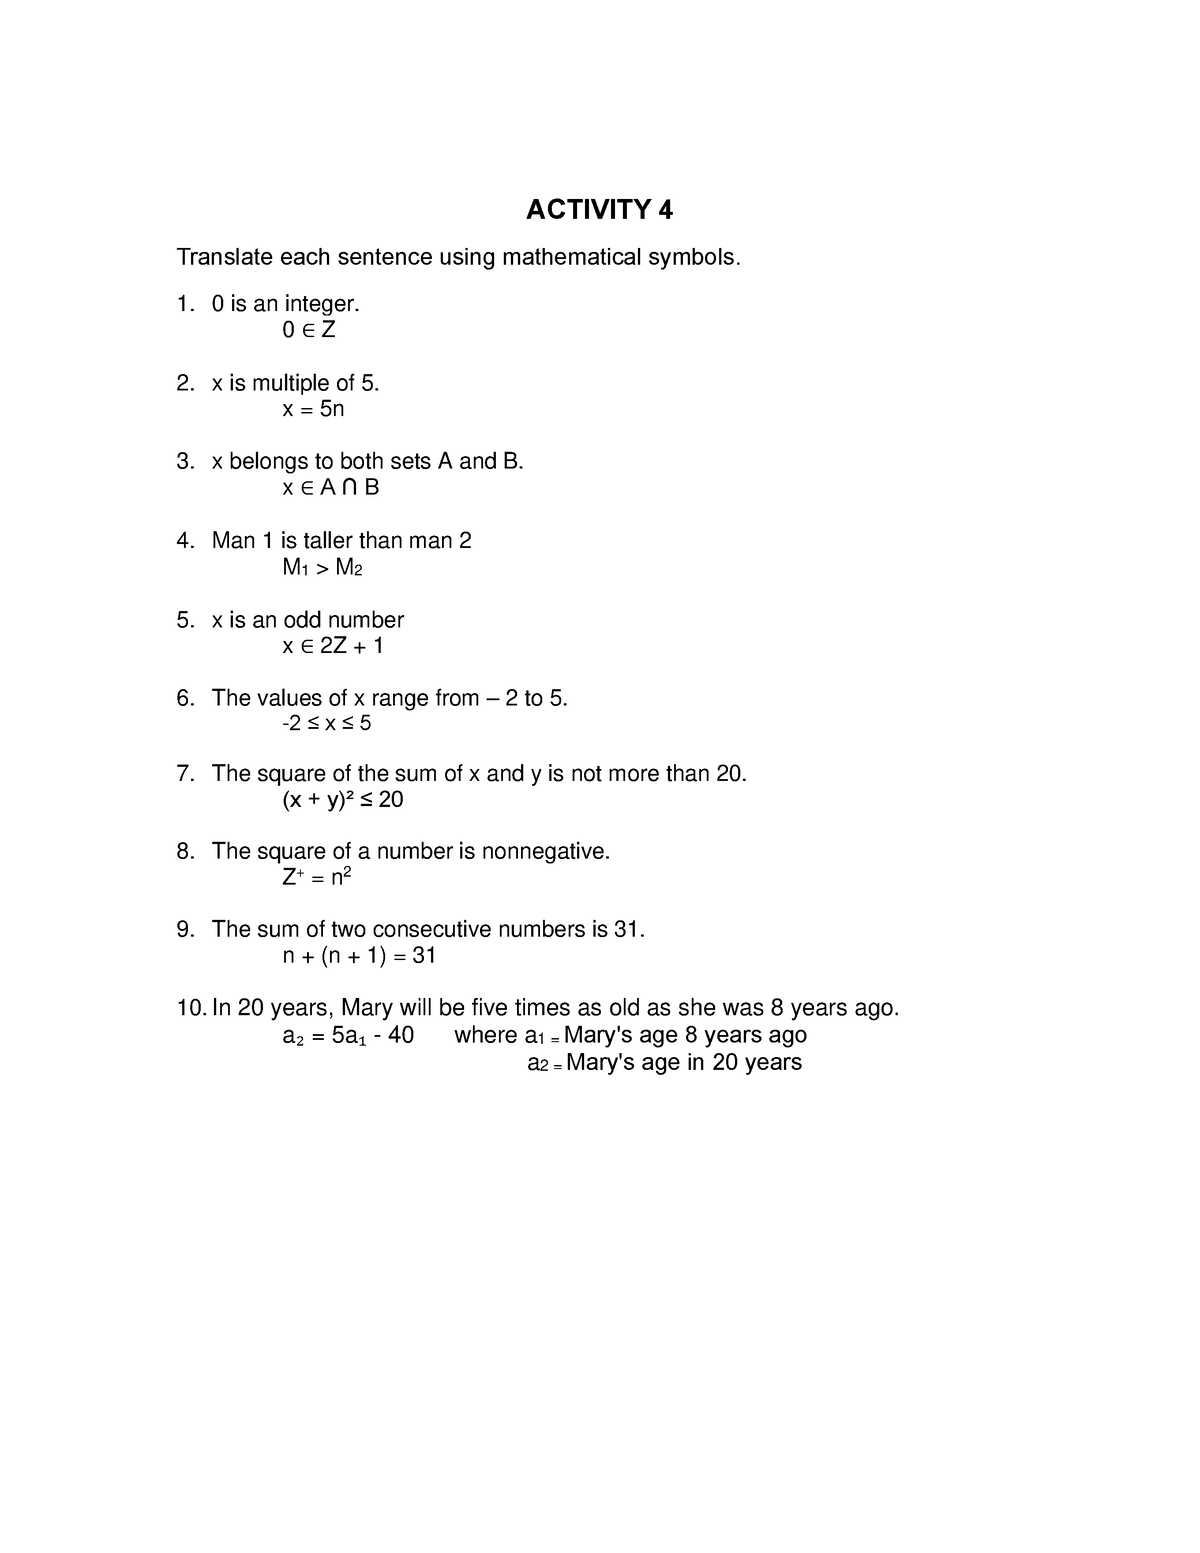 mathematical-symbols-activity-4-translate-each-sentence-using